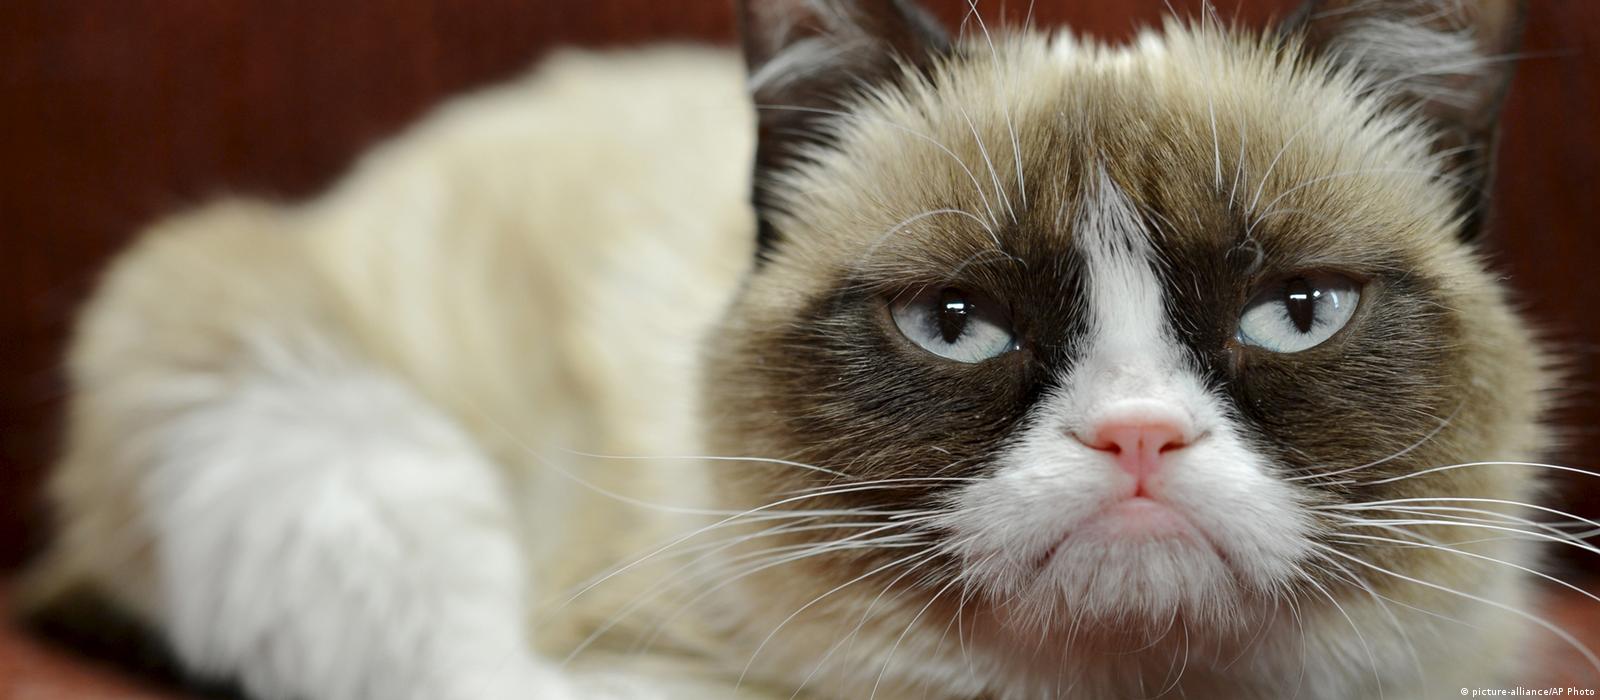 Grumpy Cat death: Beloved pet and internet meme sensation dies